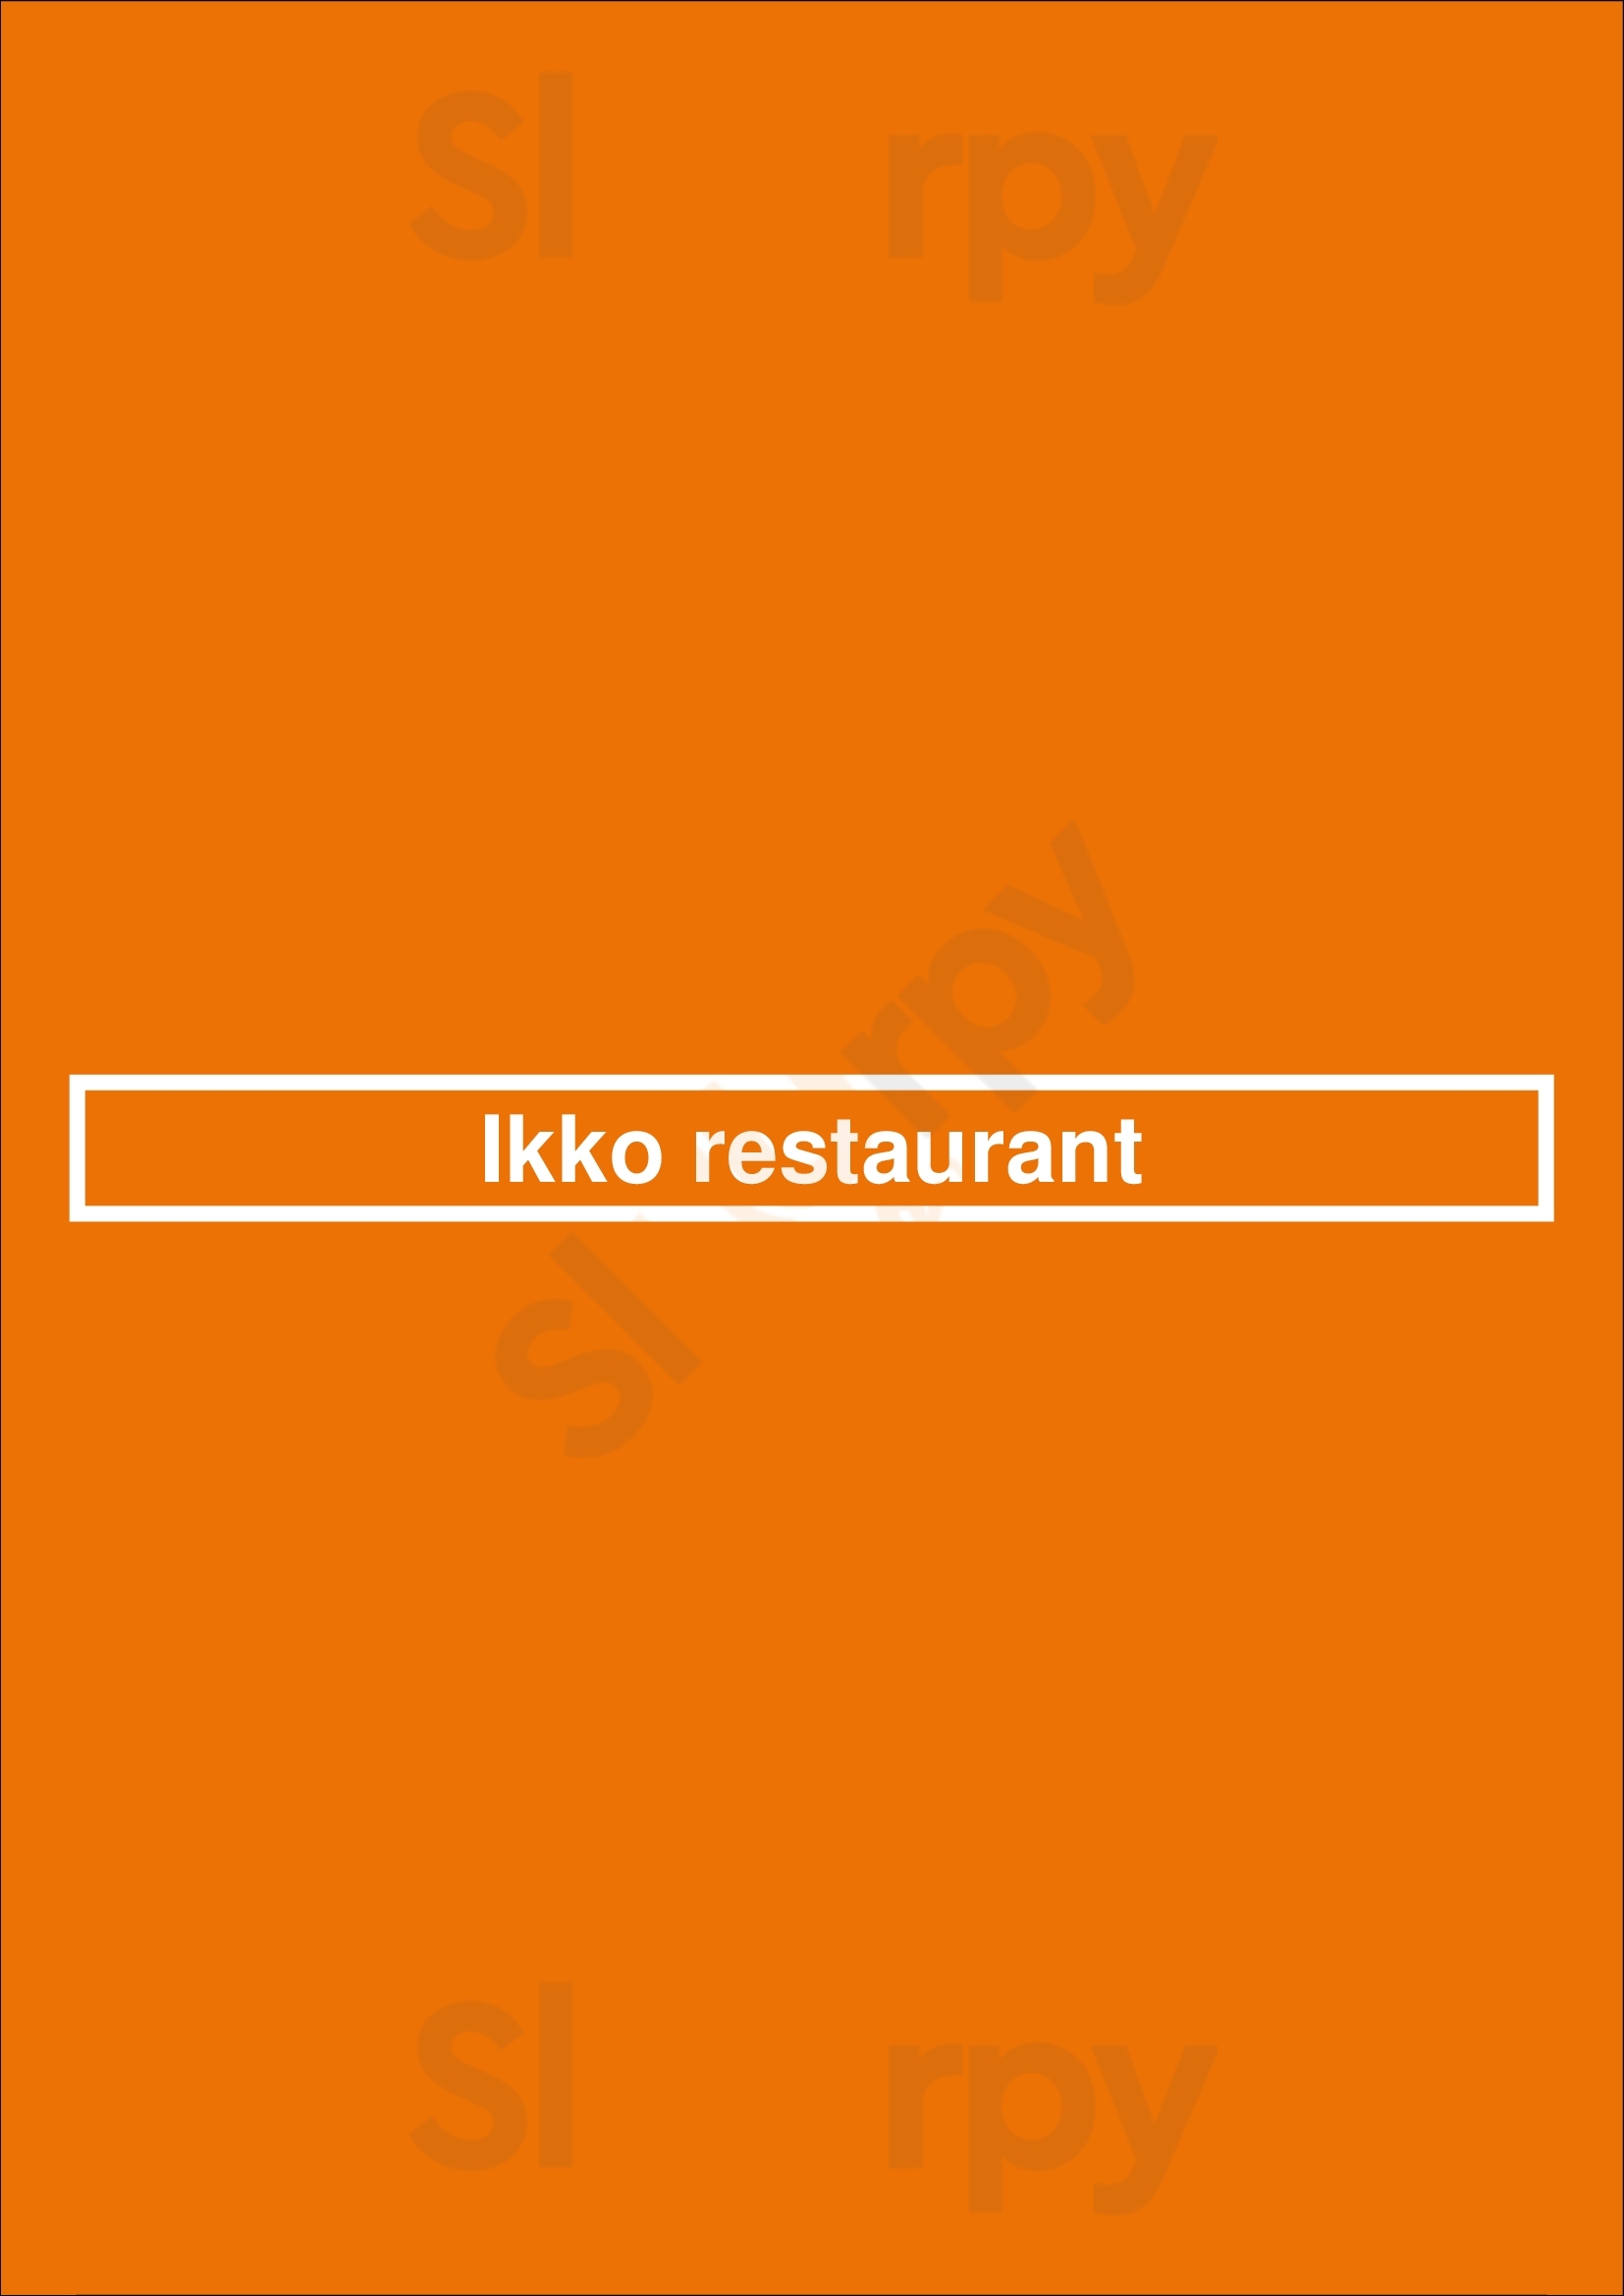 Ikko Restaurant Paris Menu - 1